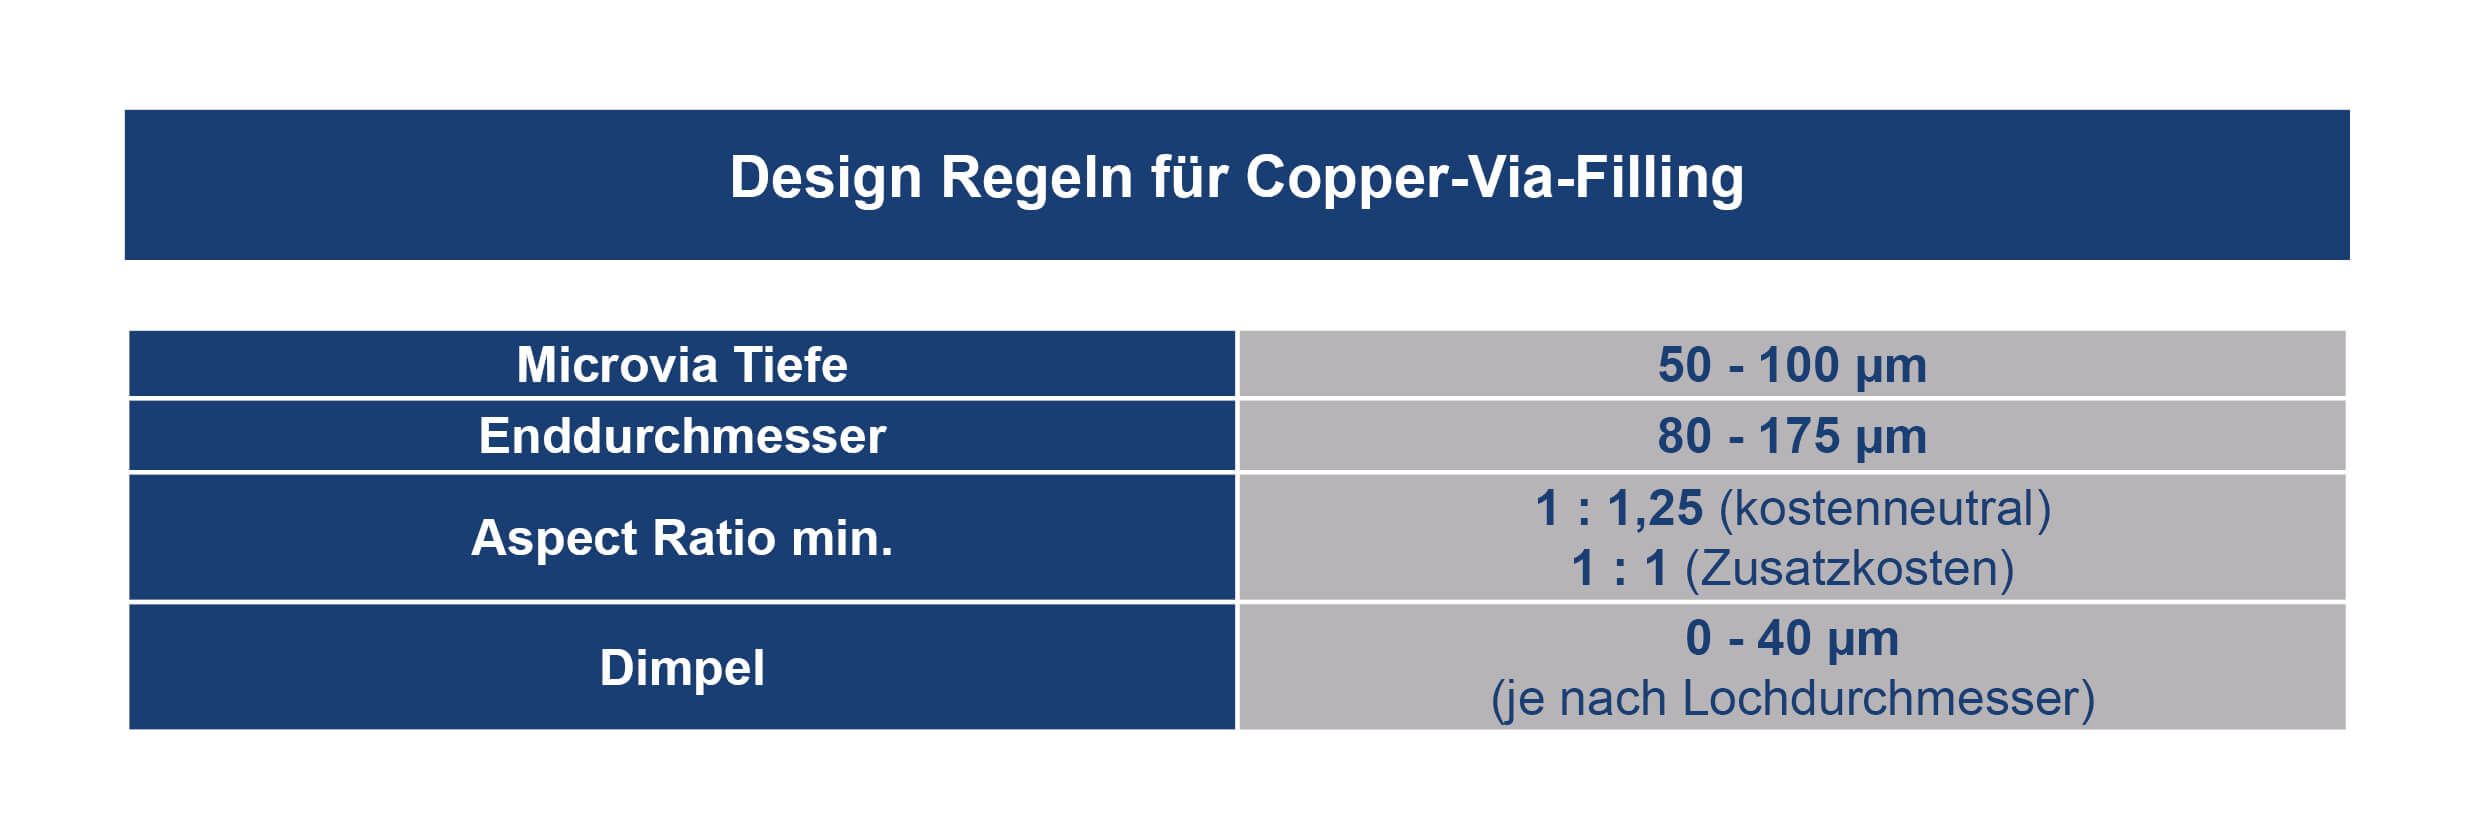 Unimicron HDI Technologie Copper Filling Design Regeln